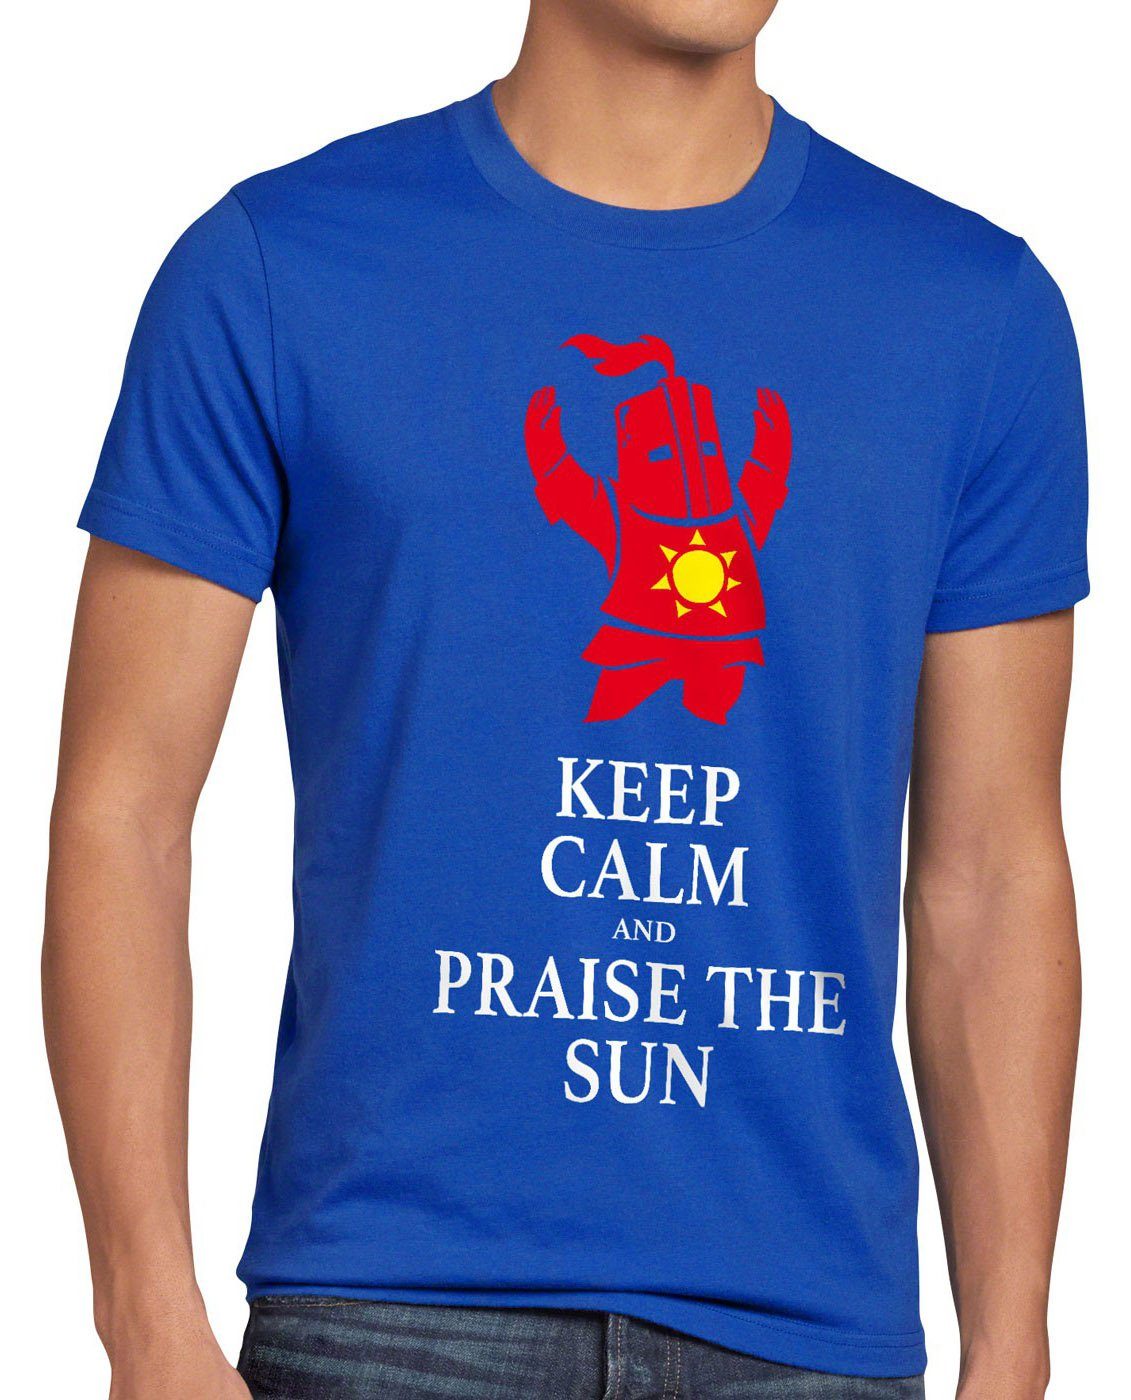 style3 Print-Shirt Herren T-Shirt Keep Calm Praise the Sun Dark Sunbro Solaire Souls Sonnen Ritter blau